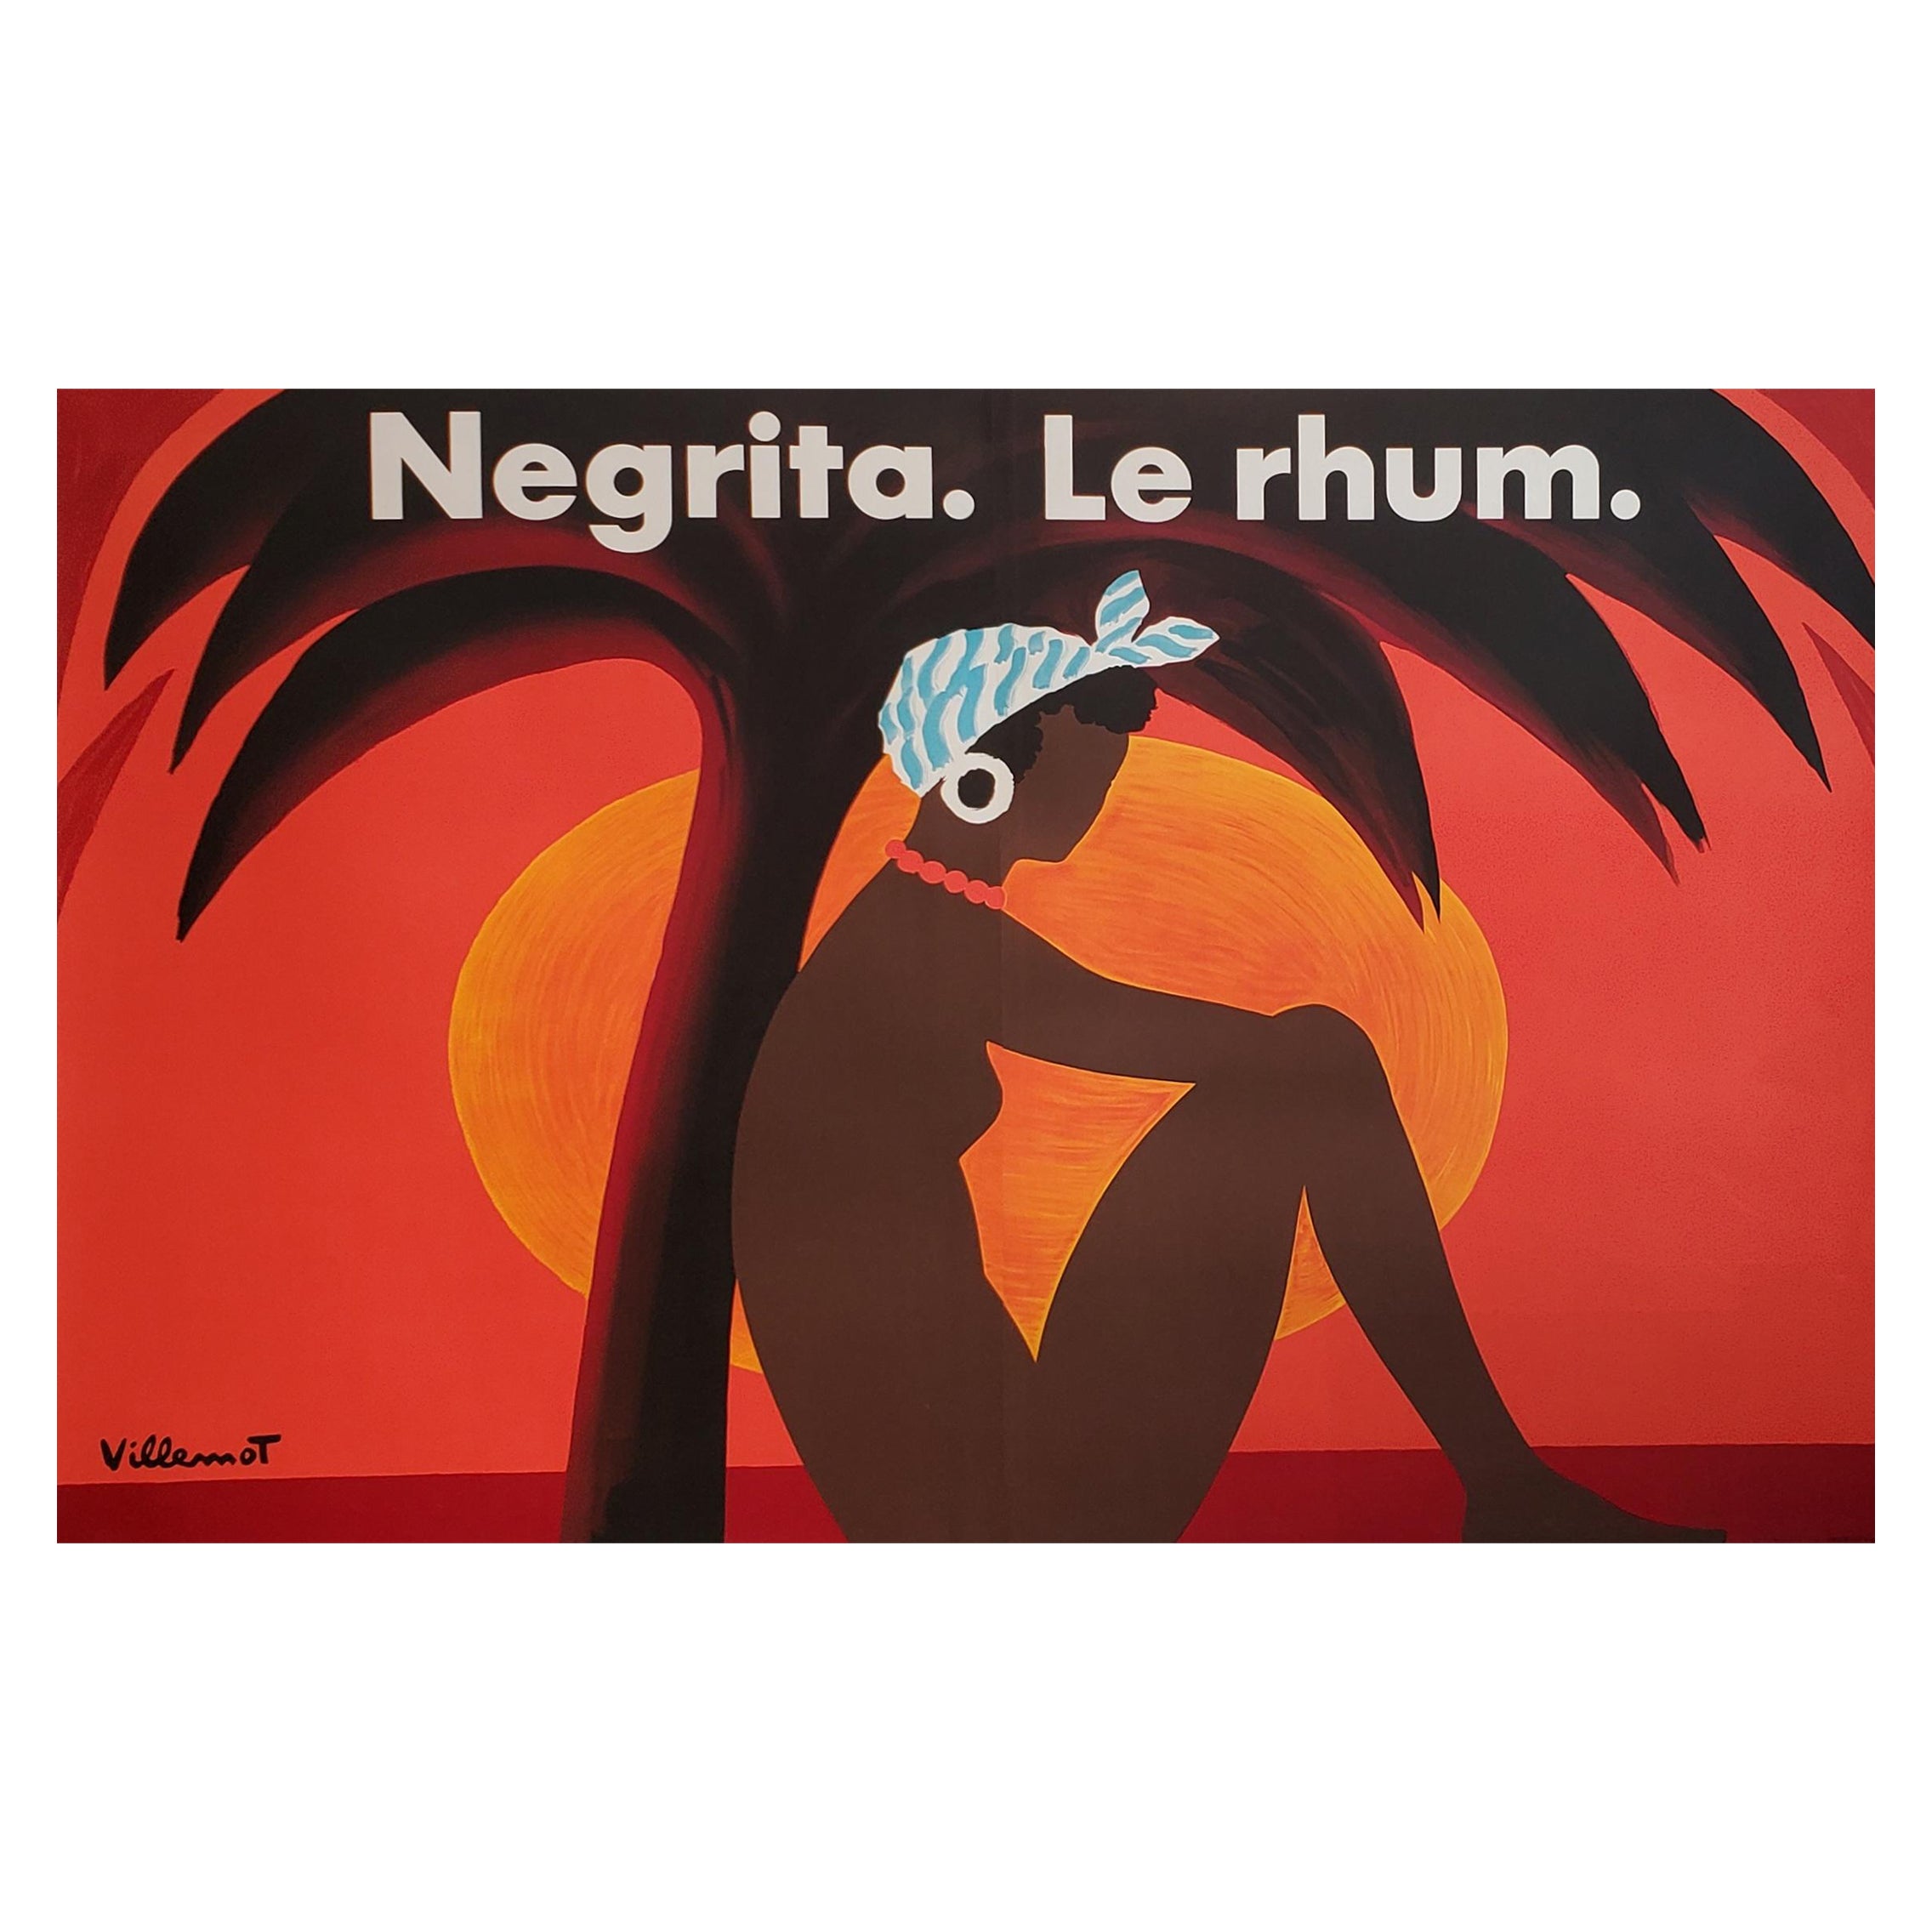 Rare Original French Advertising Poster 'NEGRITA' Double Sheet, 1974 by Villemot